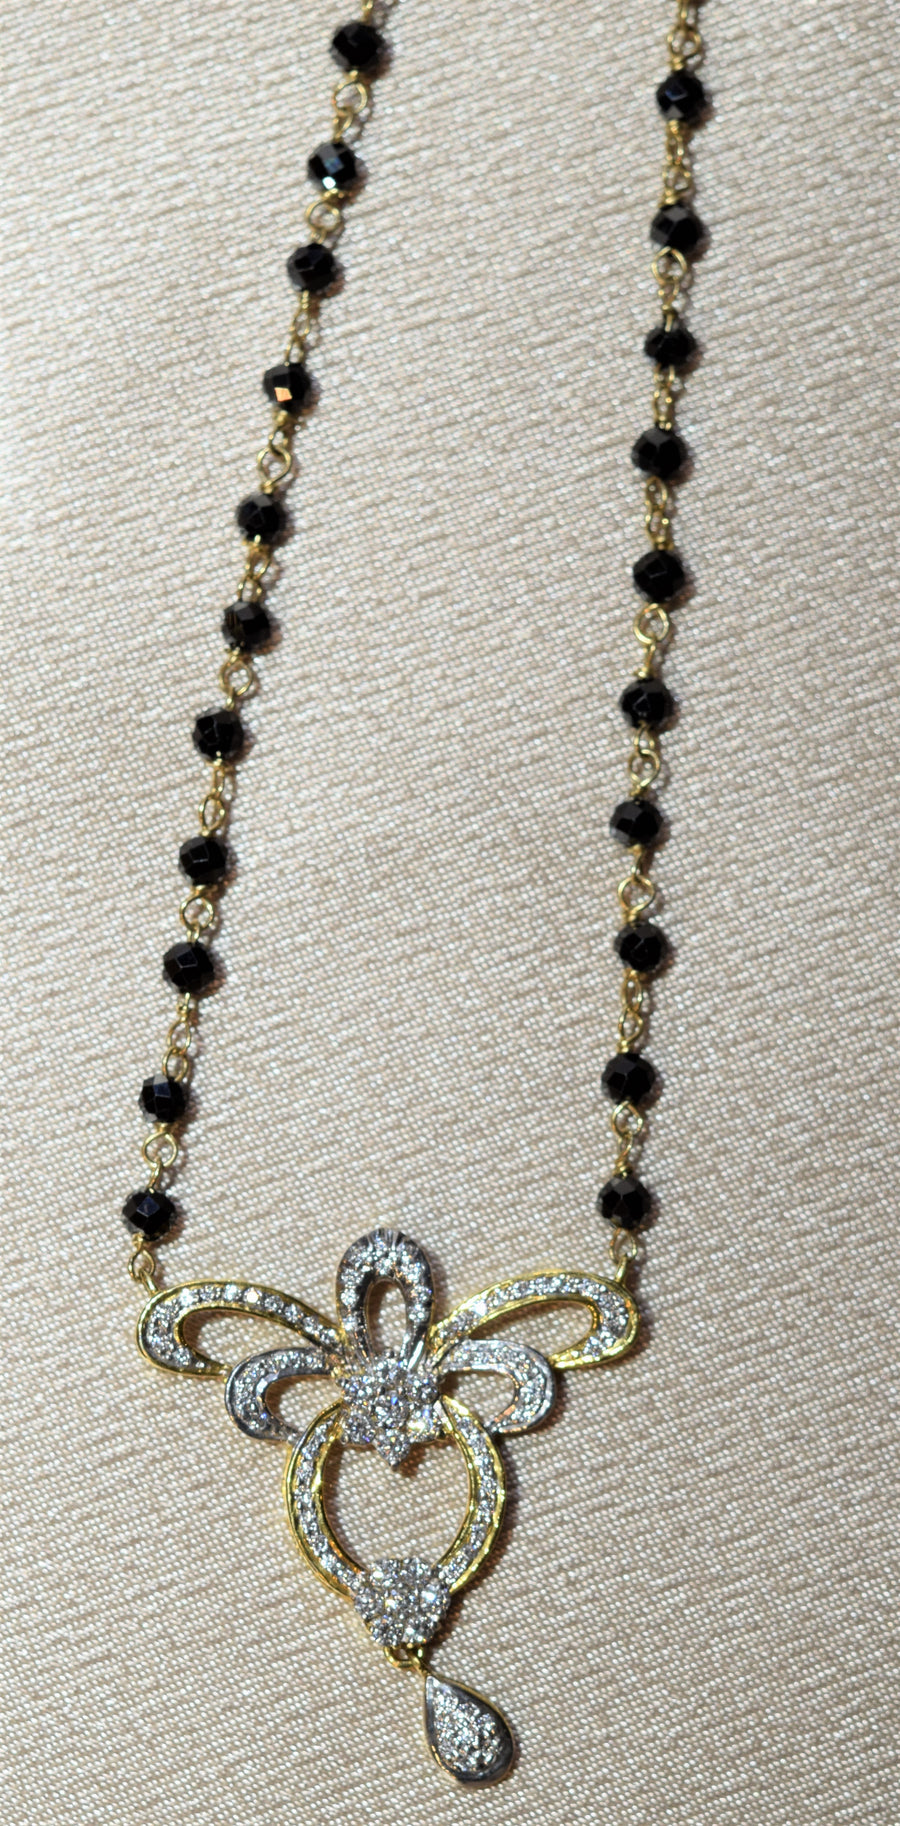 Farfalla Design Diamond Pendant - $1800